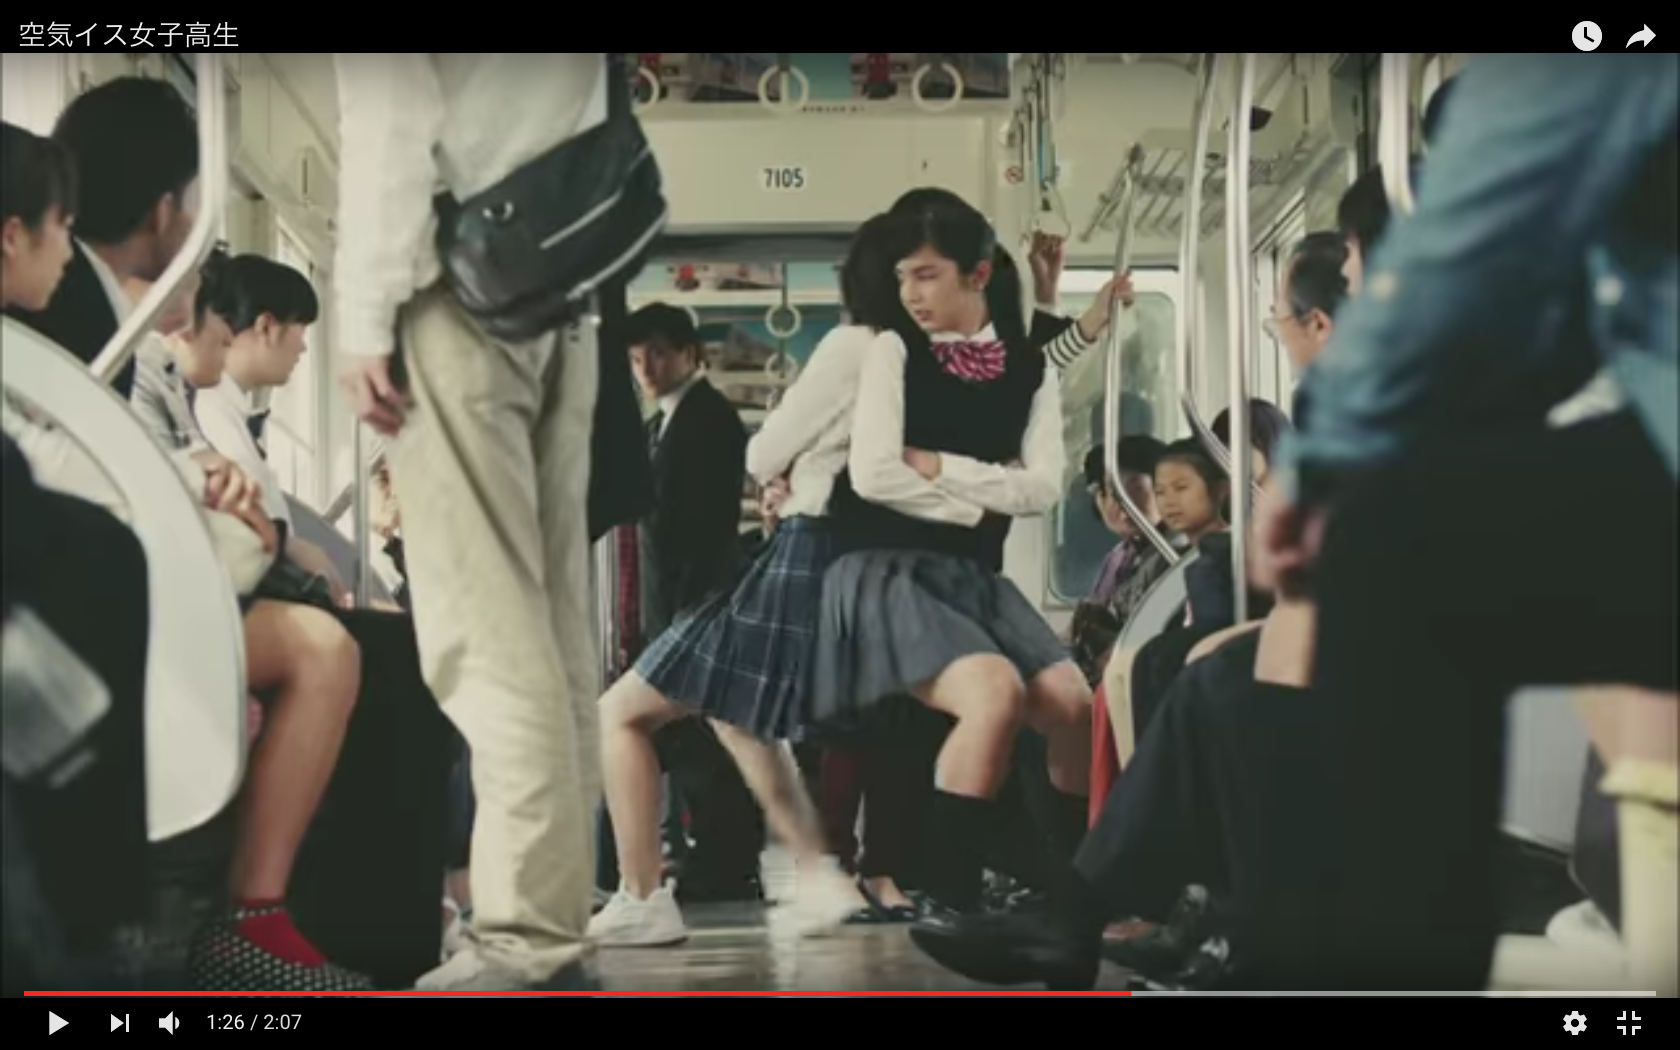 Japanese Schoolgirl Sex Video - Japanese schoolgirls engage in â€œAir Chair Battleâ€ in railway commercial  promoting mannersã€Vidã€‘ | SoraNews24 -Japan News-